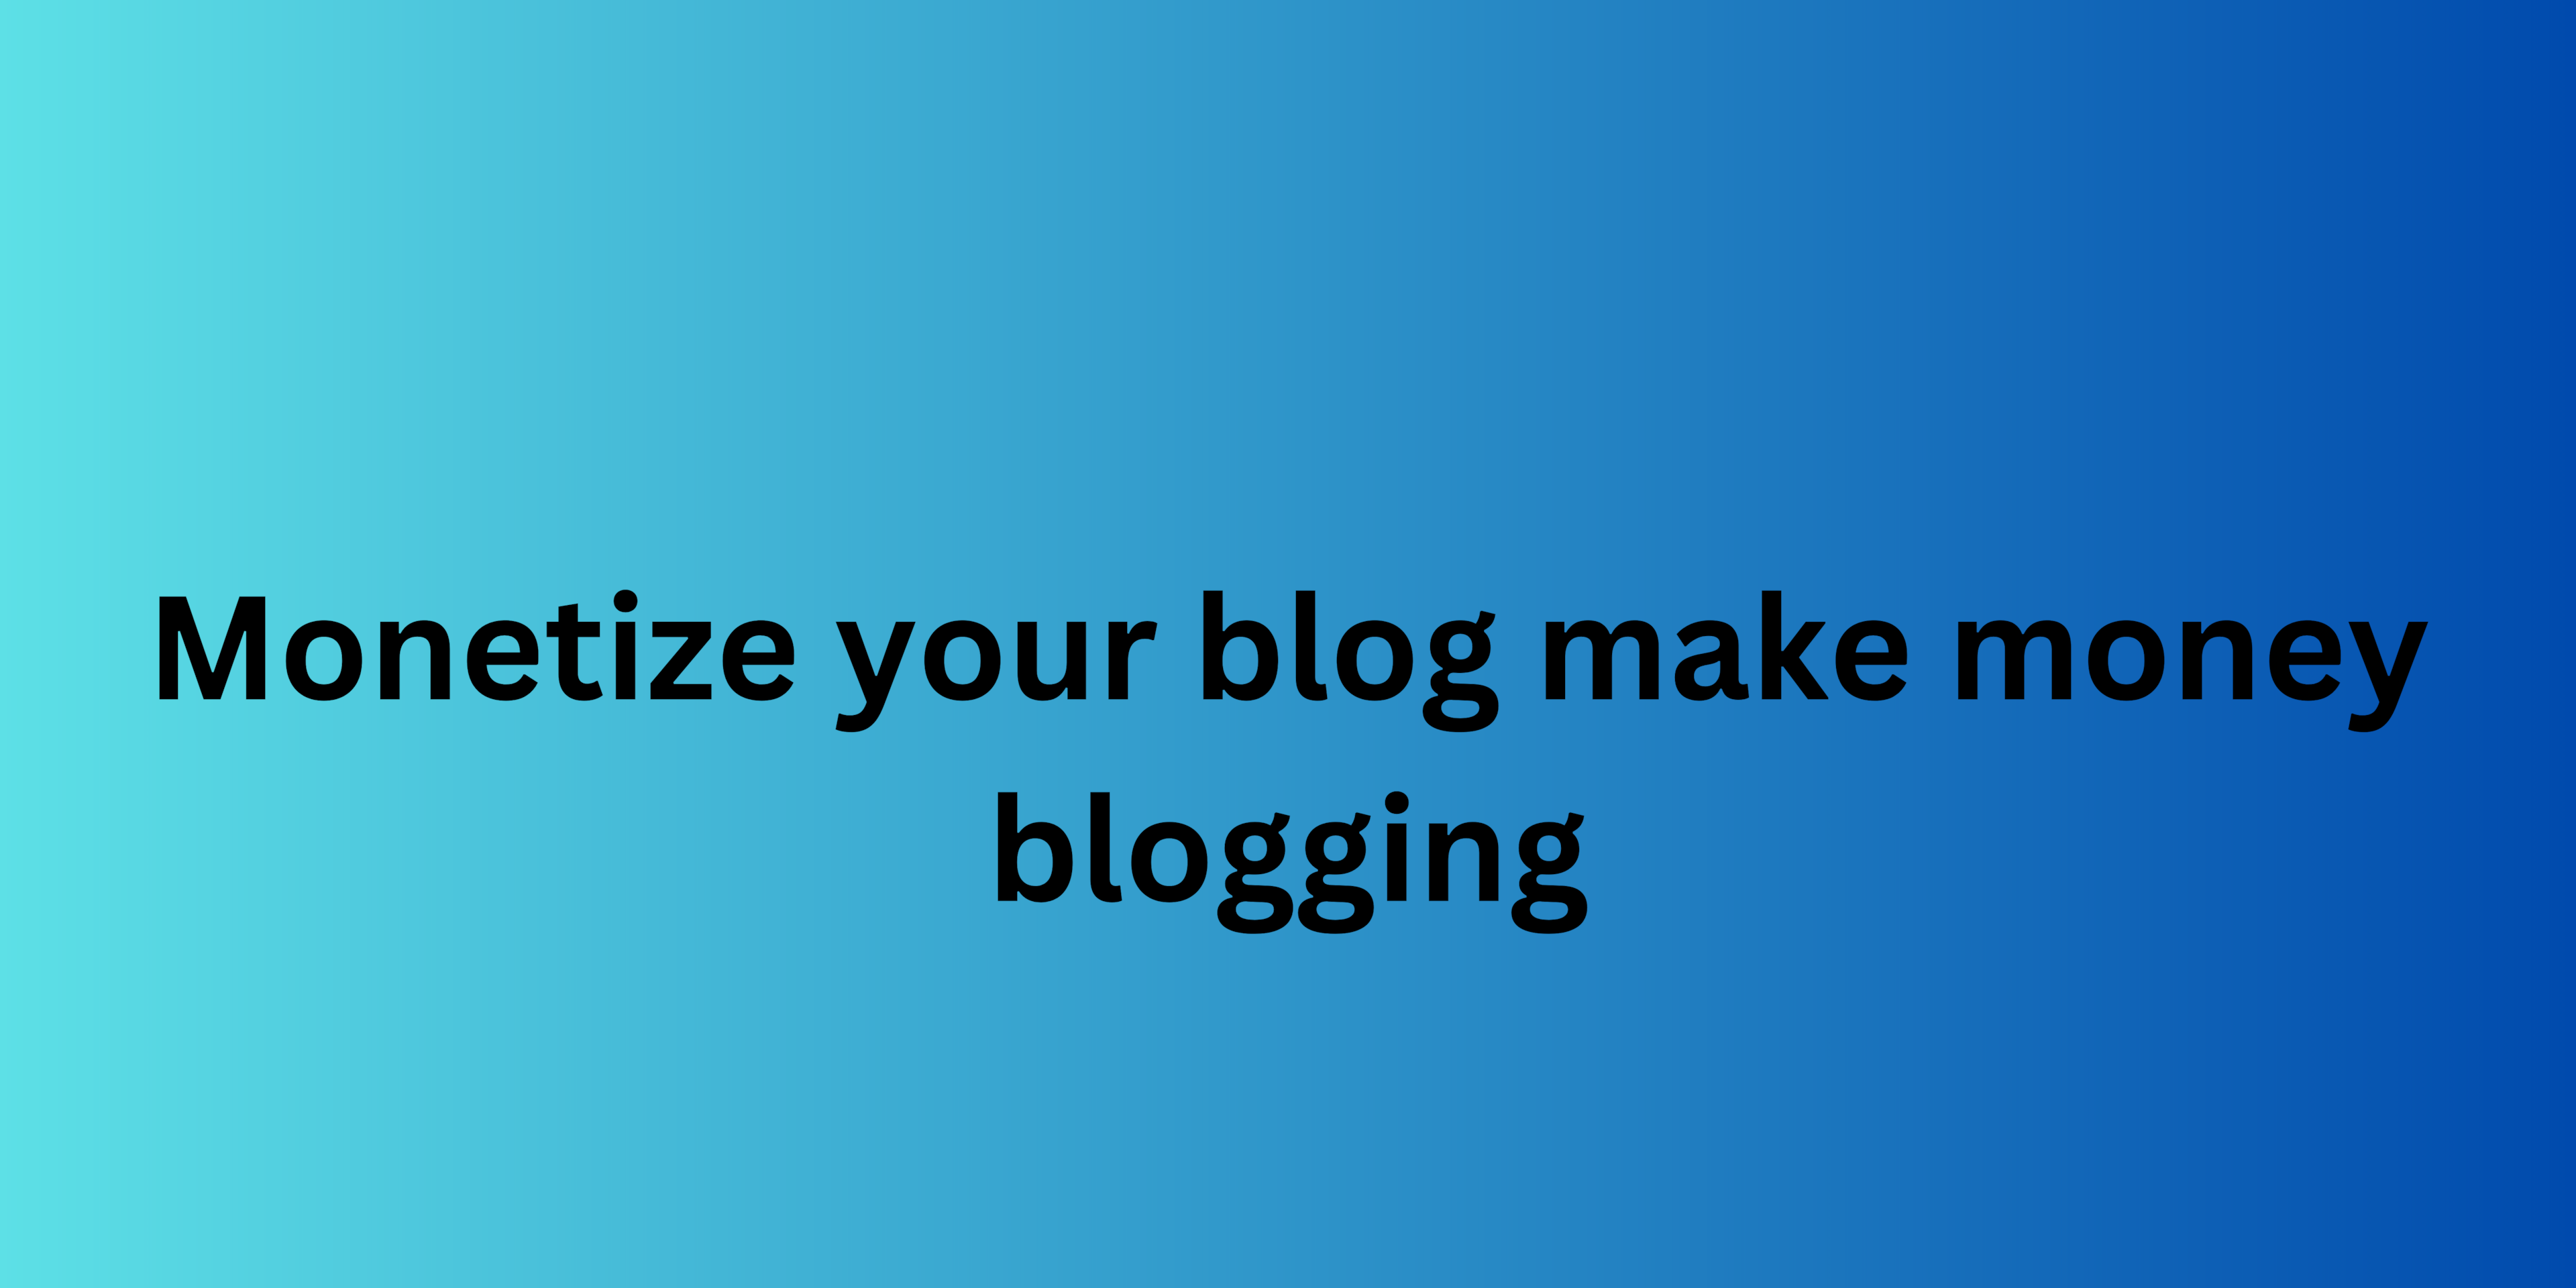 Monetize your blog make money blogging